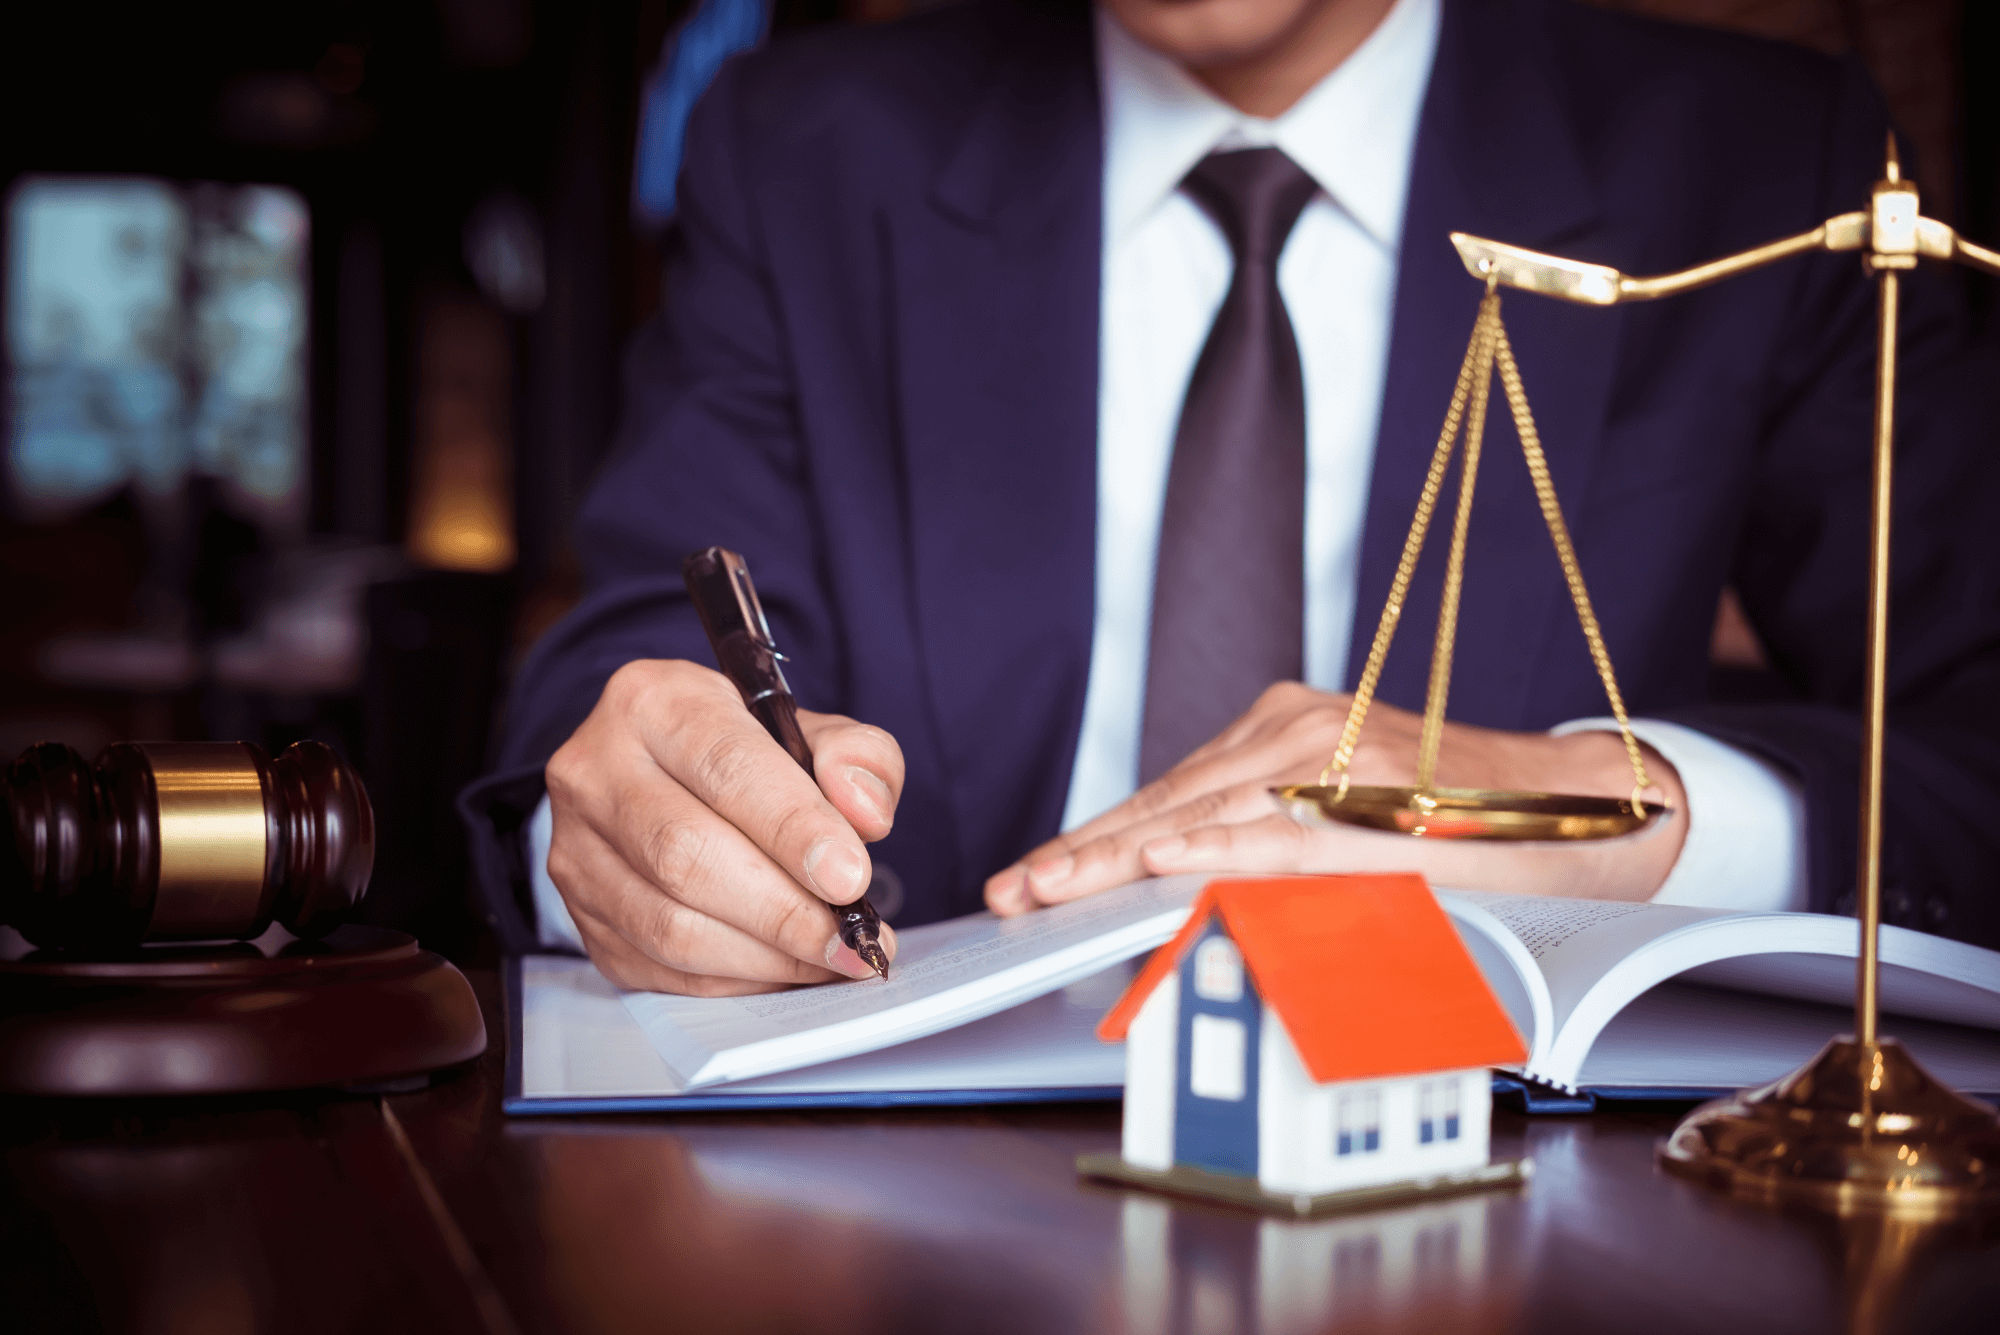 Property Law, Taxation & VAT